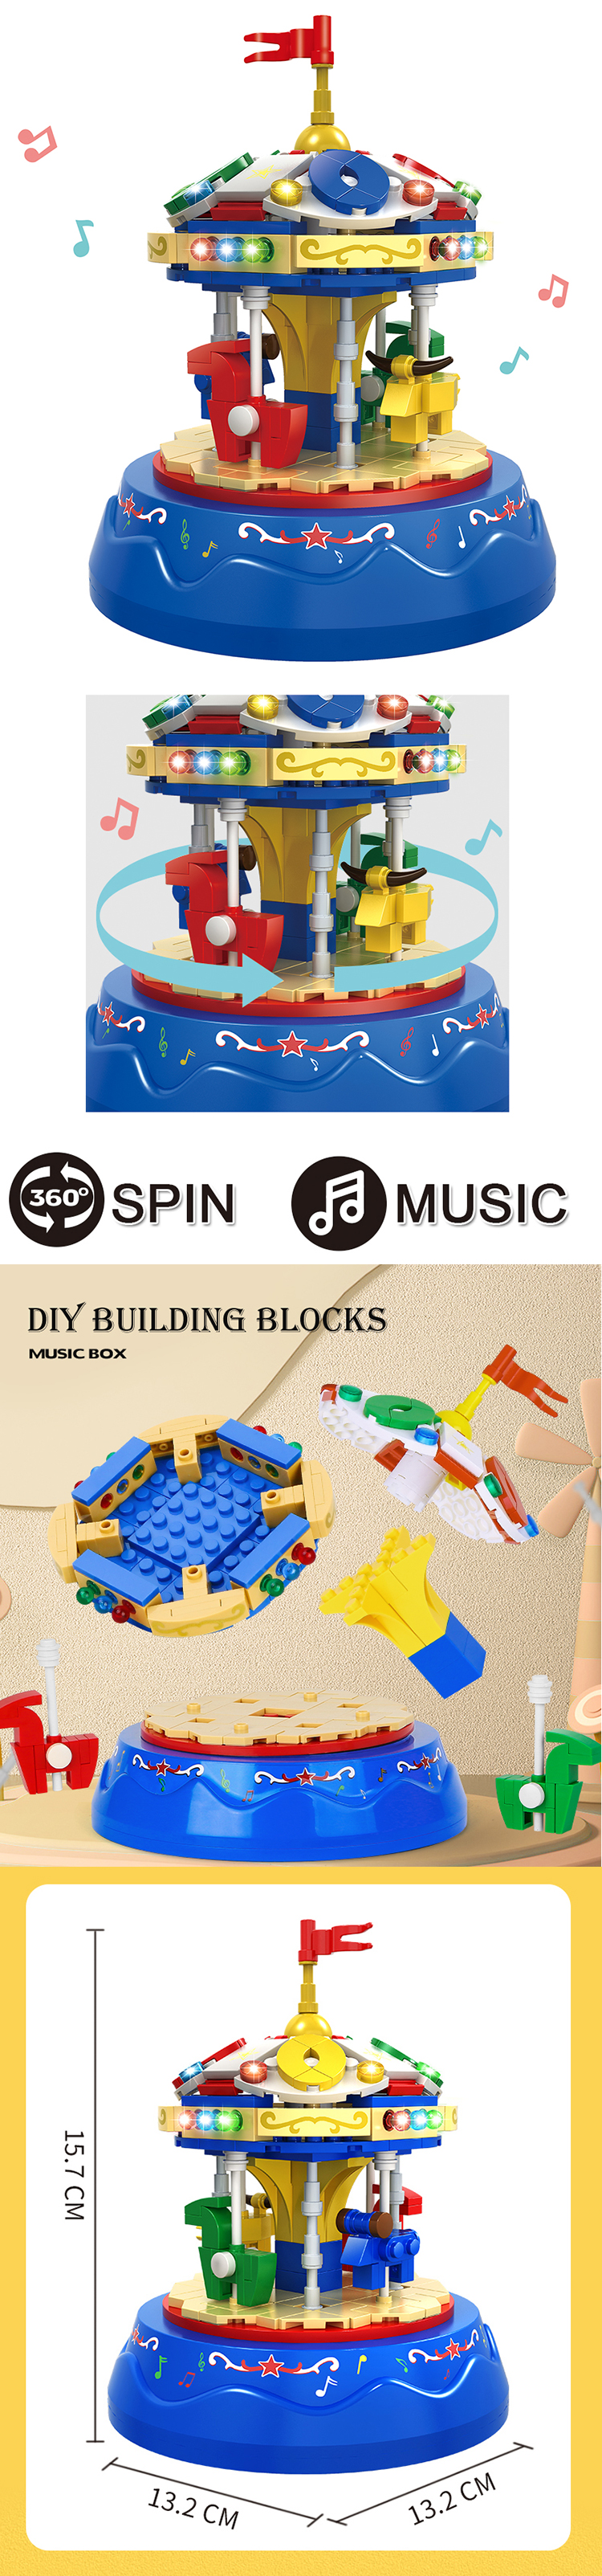 WOMA TOYS OEM ODM Spin Music Box Carousel Building Blocks Bricks Set For children birthday Christmas Gifts jouet Home Decor